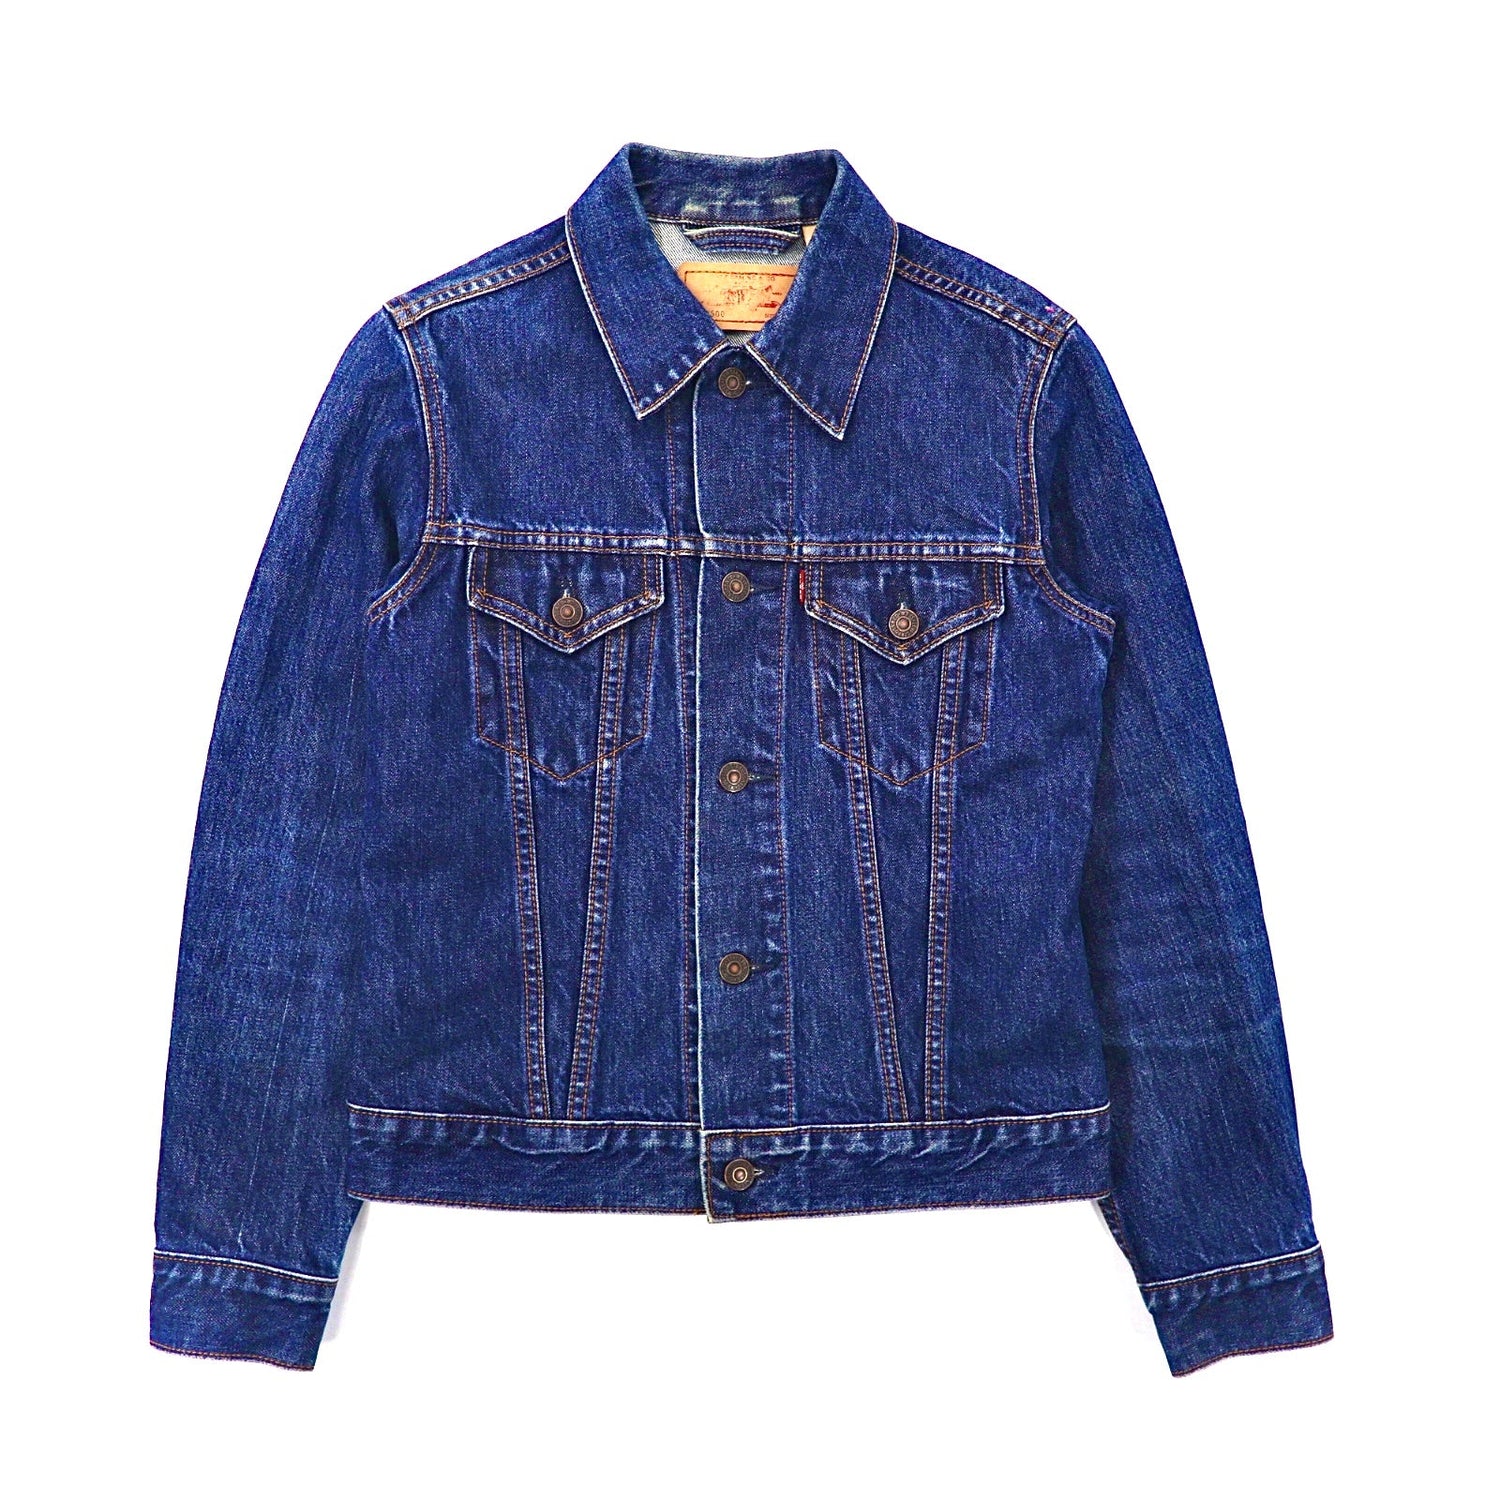 Levi's Denim Jacket G Jean S Blue 3rd Model 90's 78500-0207 – 日本